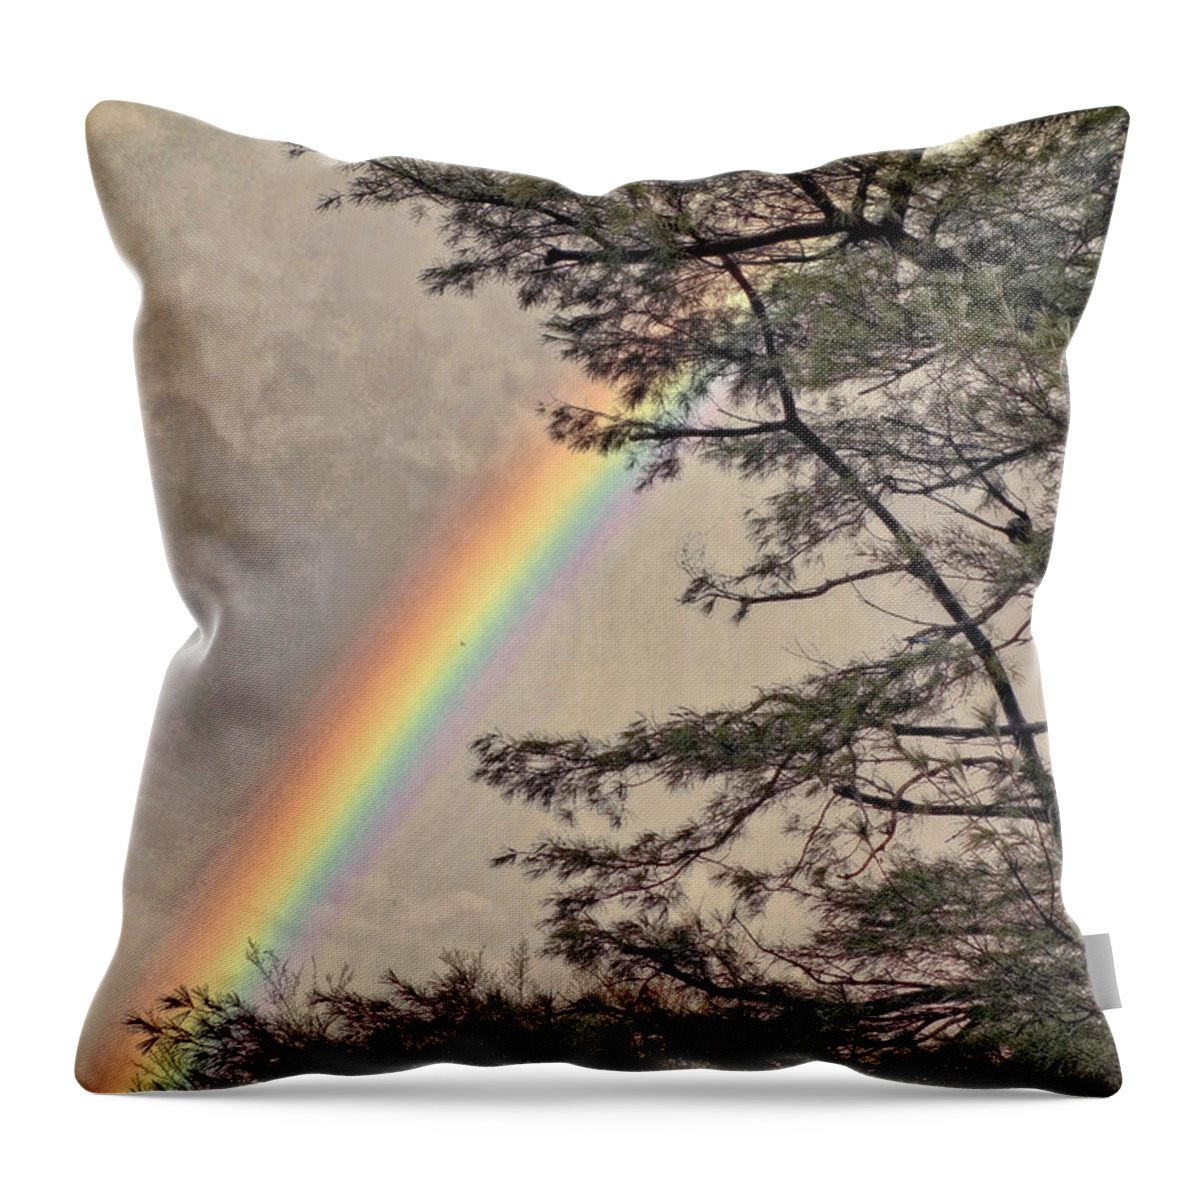 Rainbow Throw Pillow featuring the photograph Northern Forest Rainbow by Russ Considine